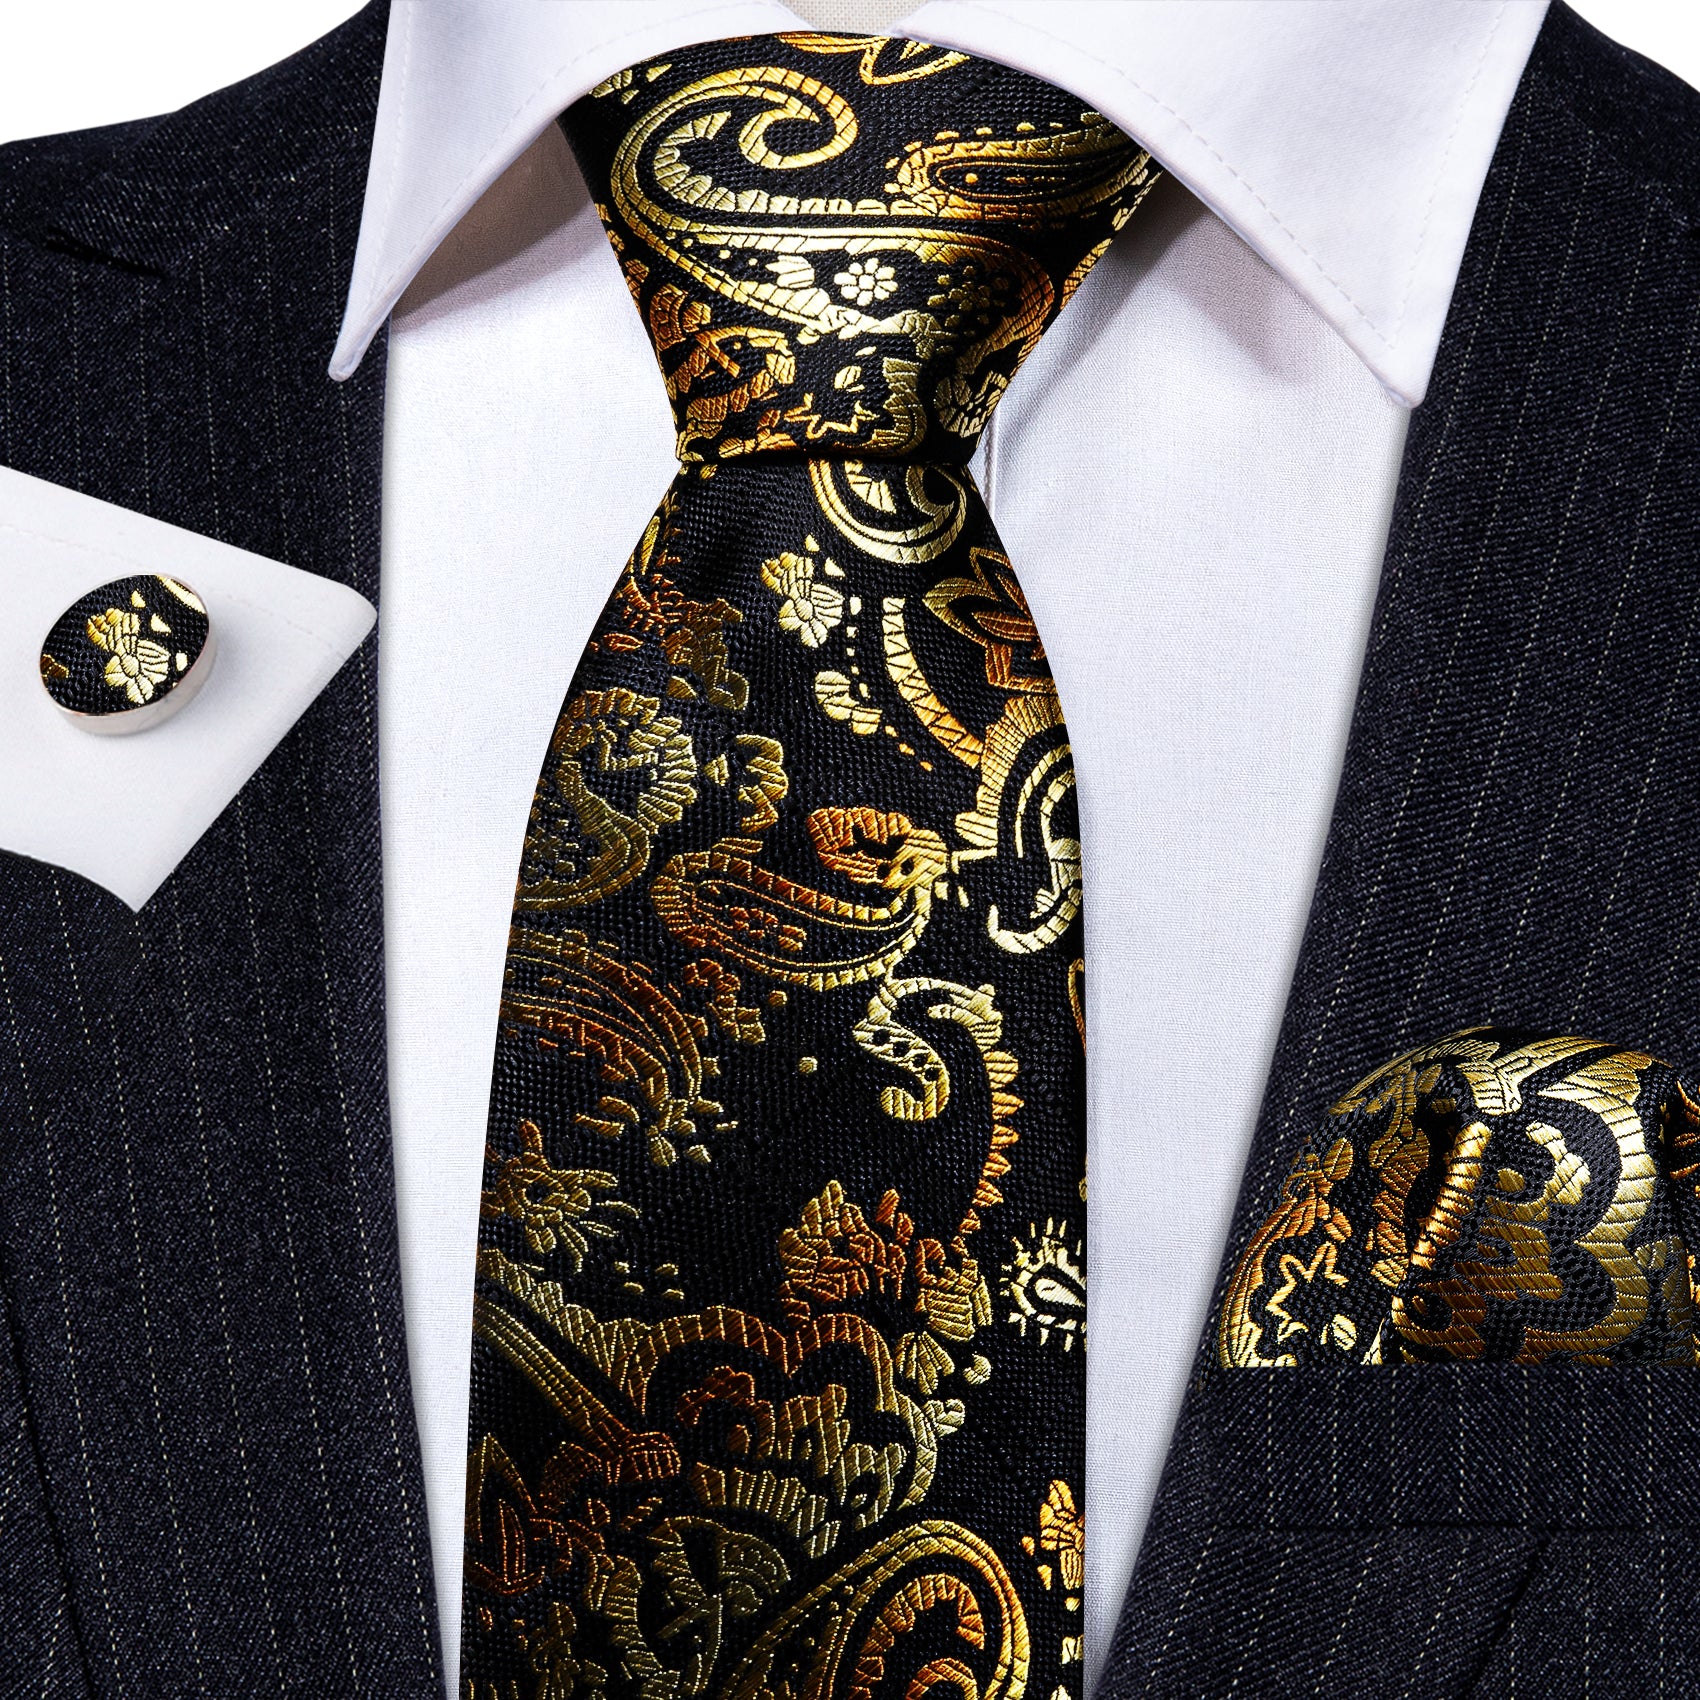 New Black Gold Paisley Tie Handkerchief Cufflinks Set